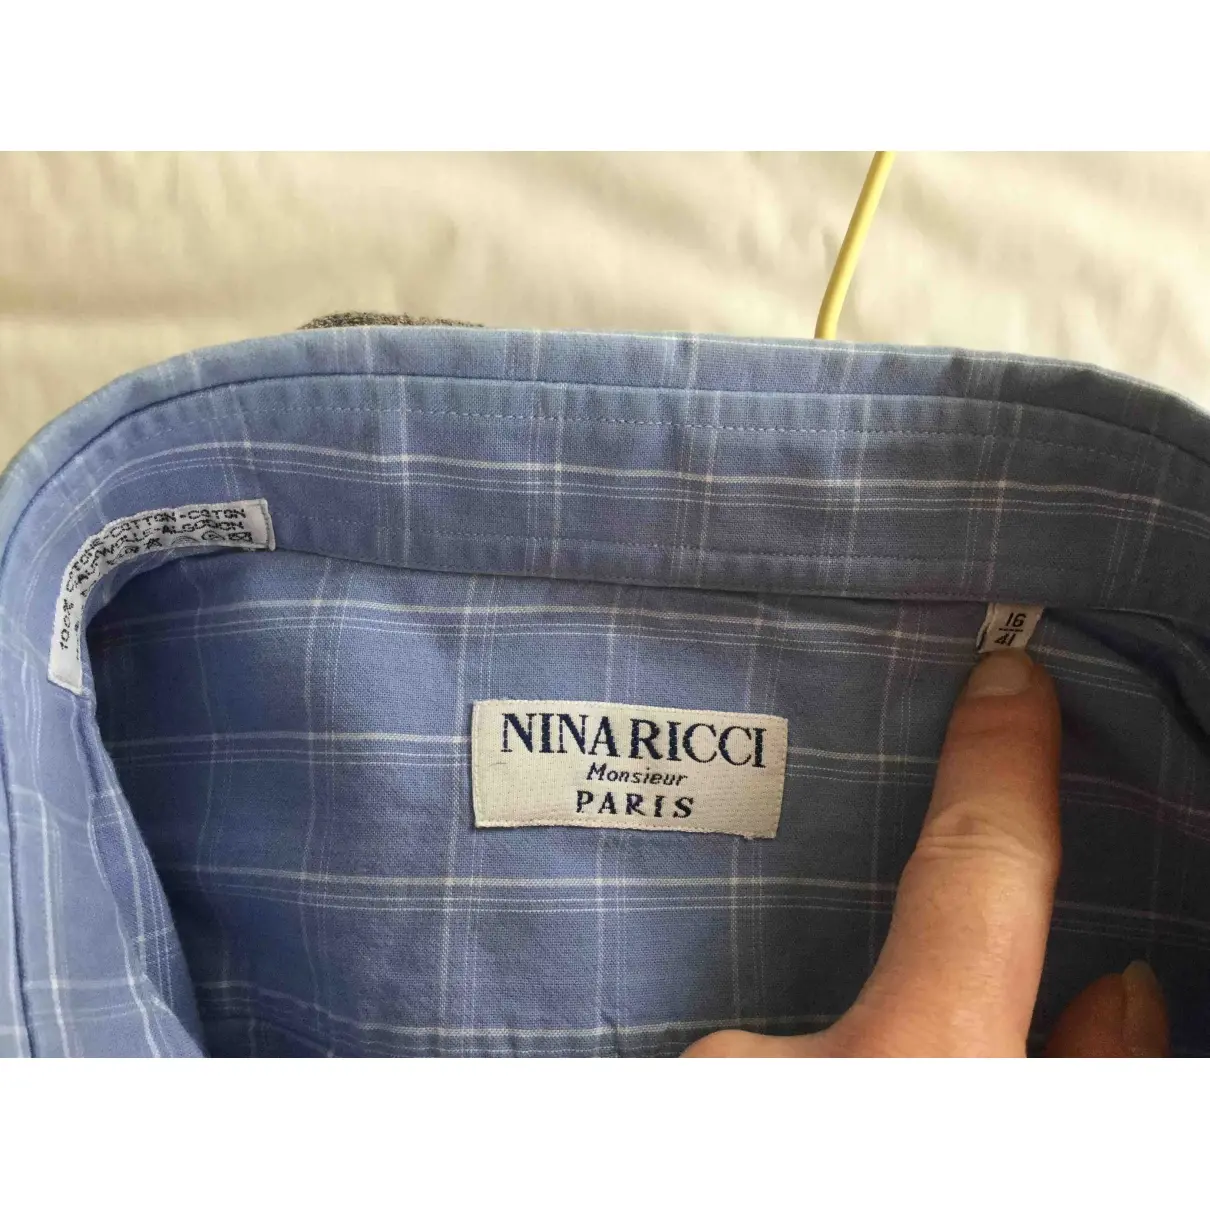 Buy Nina Ricci Leather shirt online